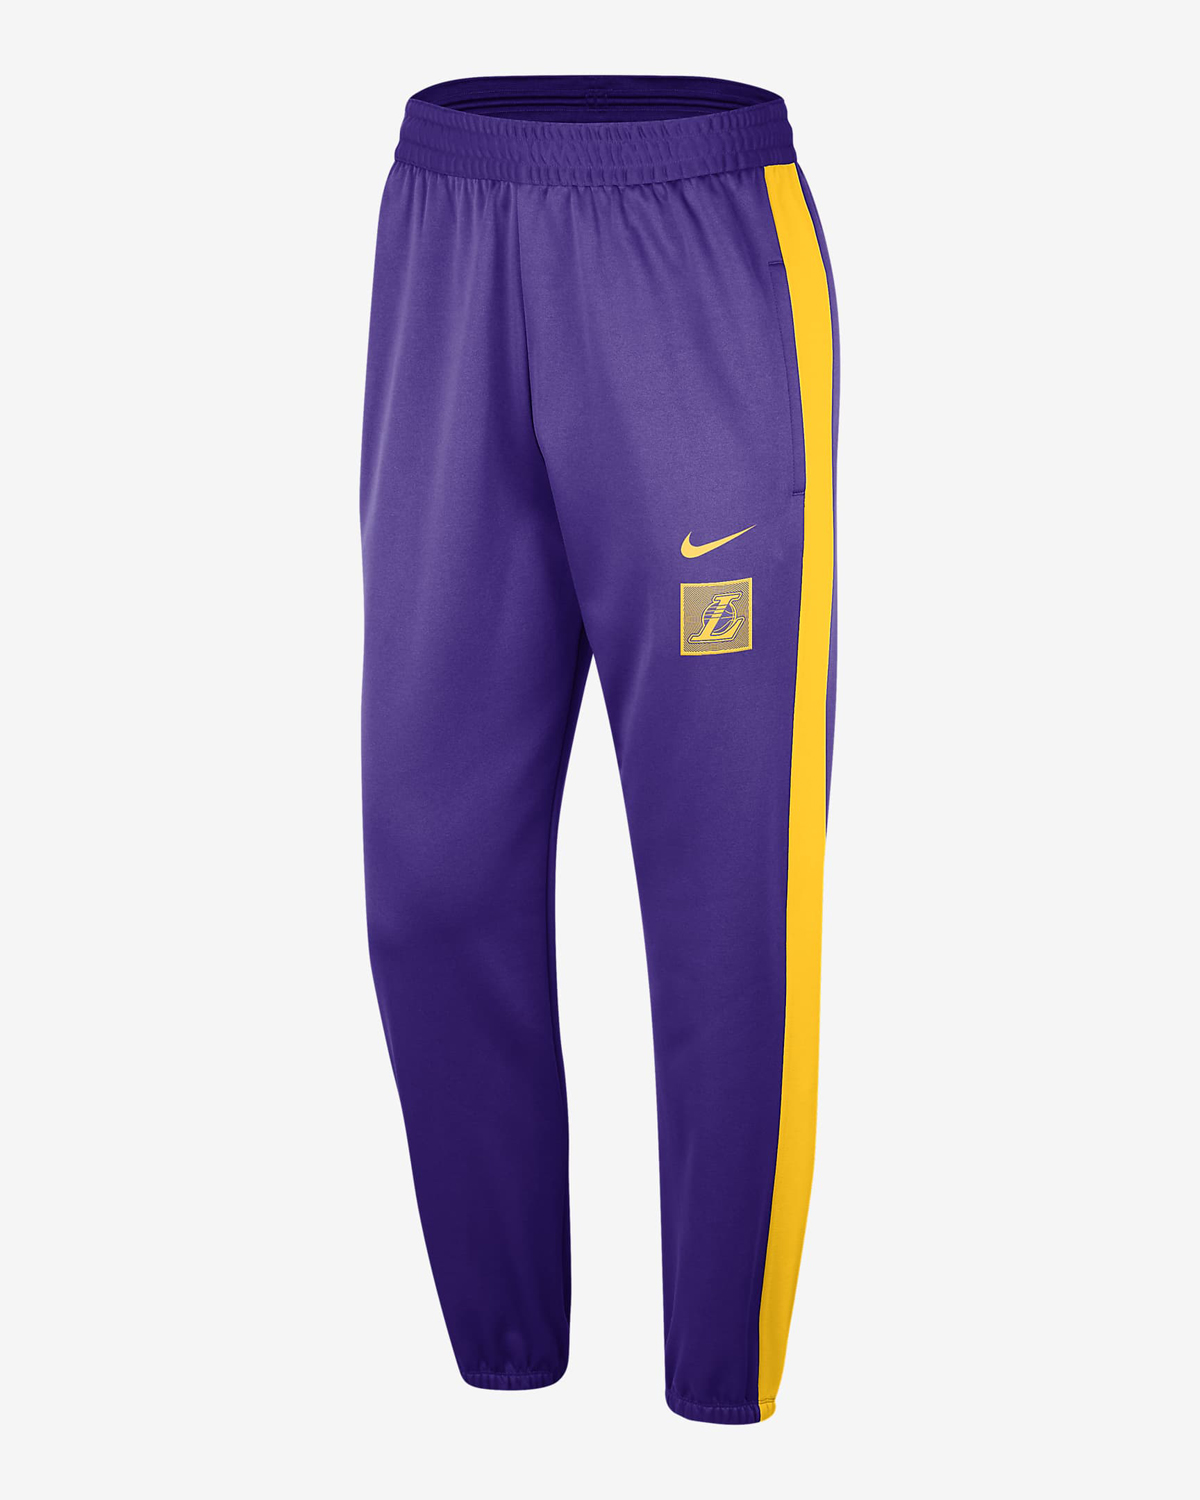 Nike-Lakers-Starting-5-Pants-Field-Purple-Gold